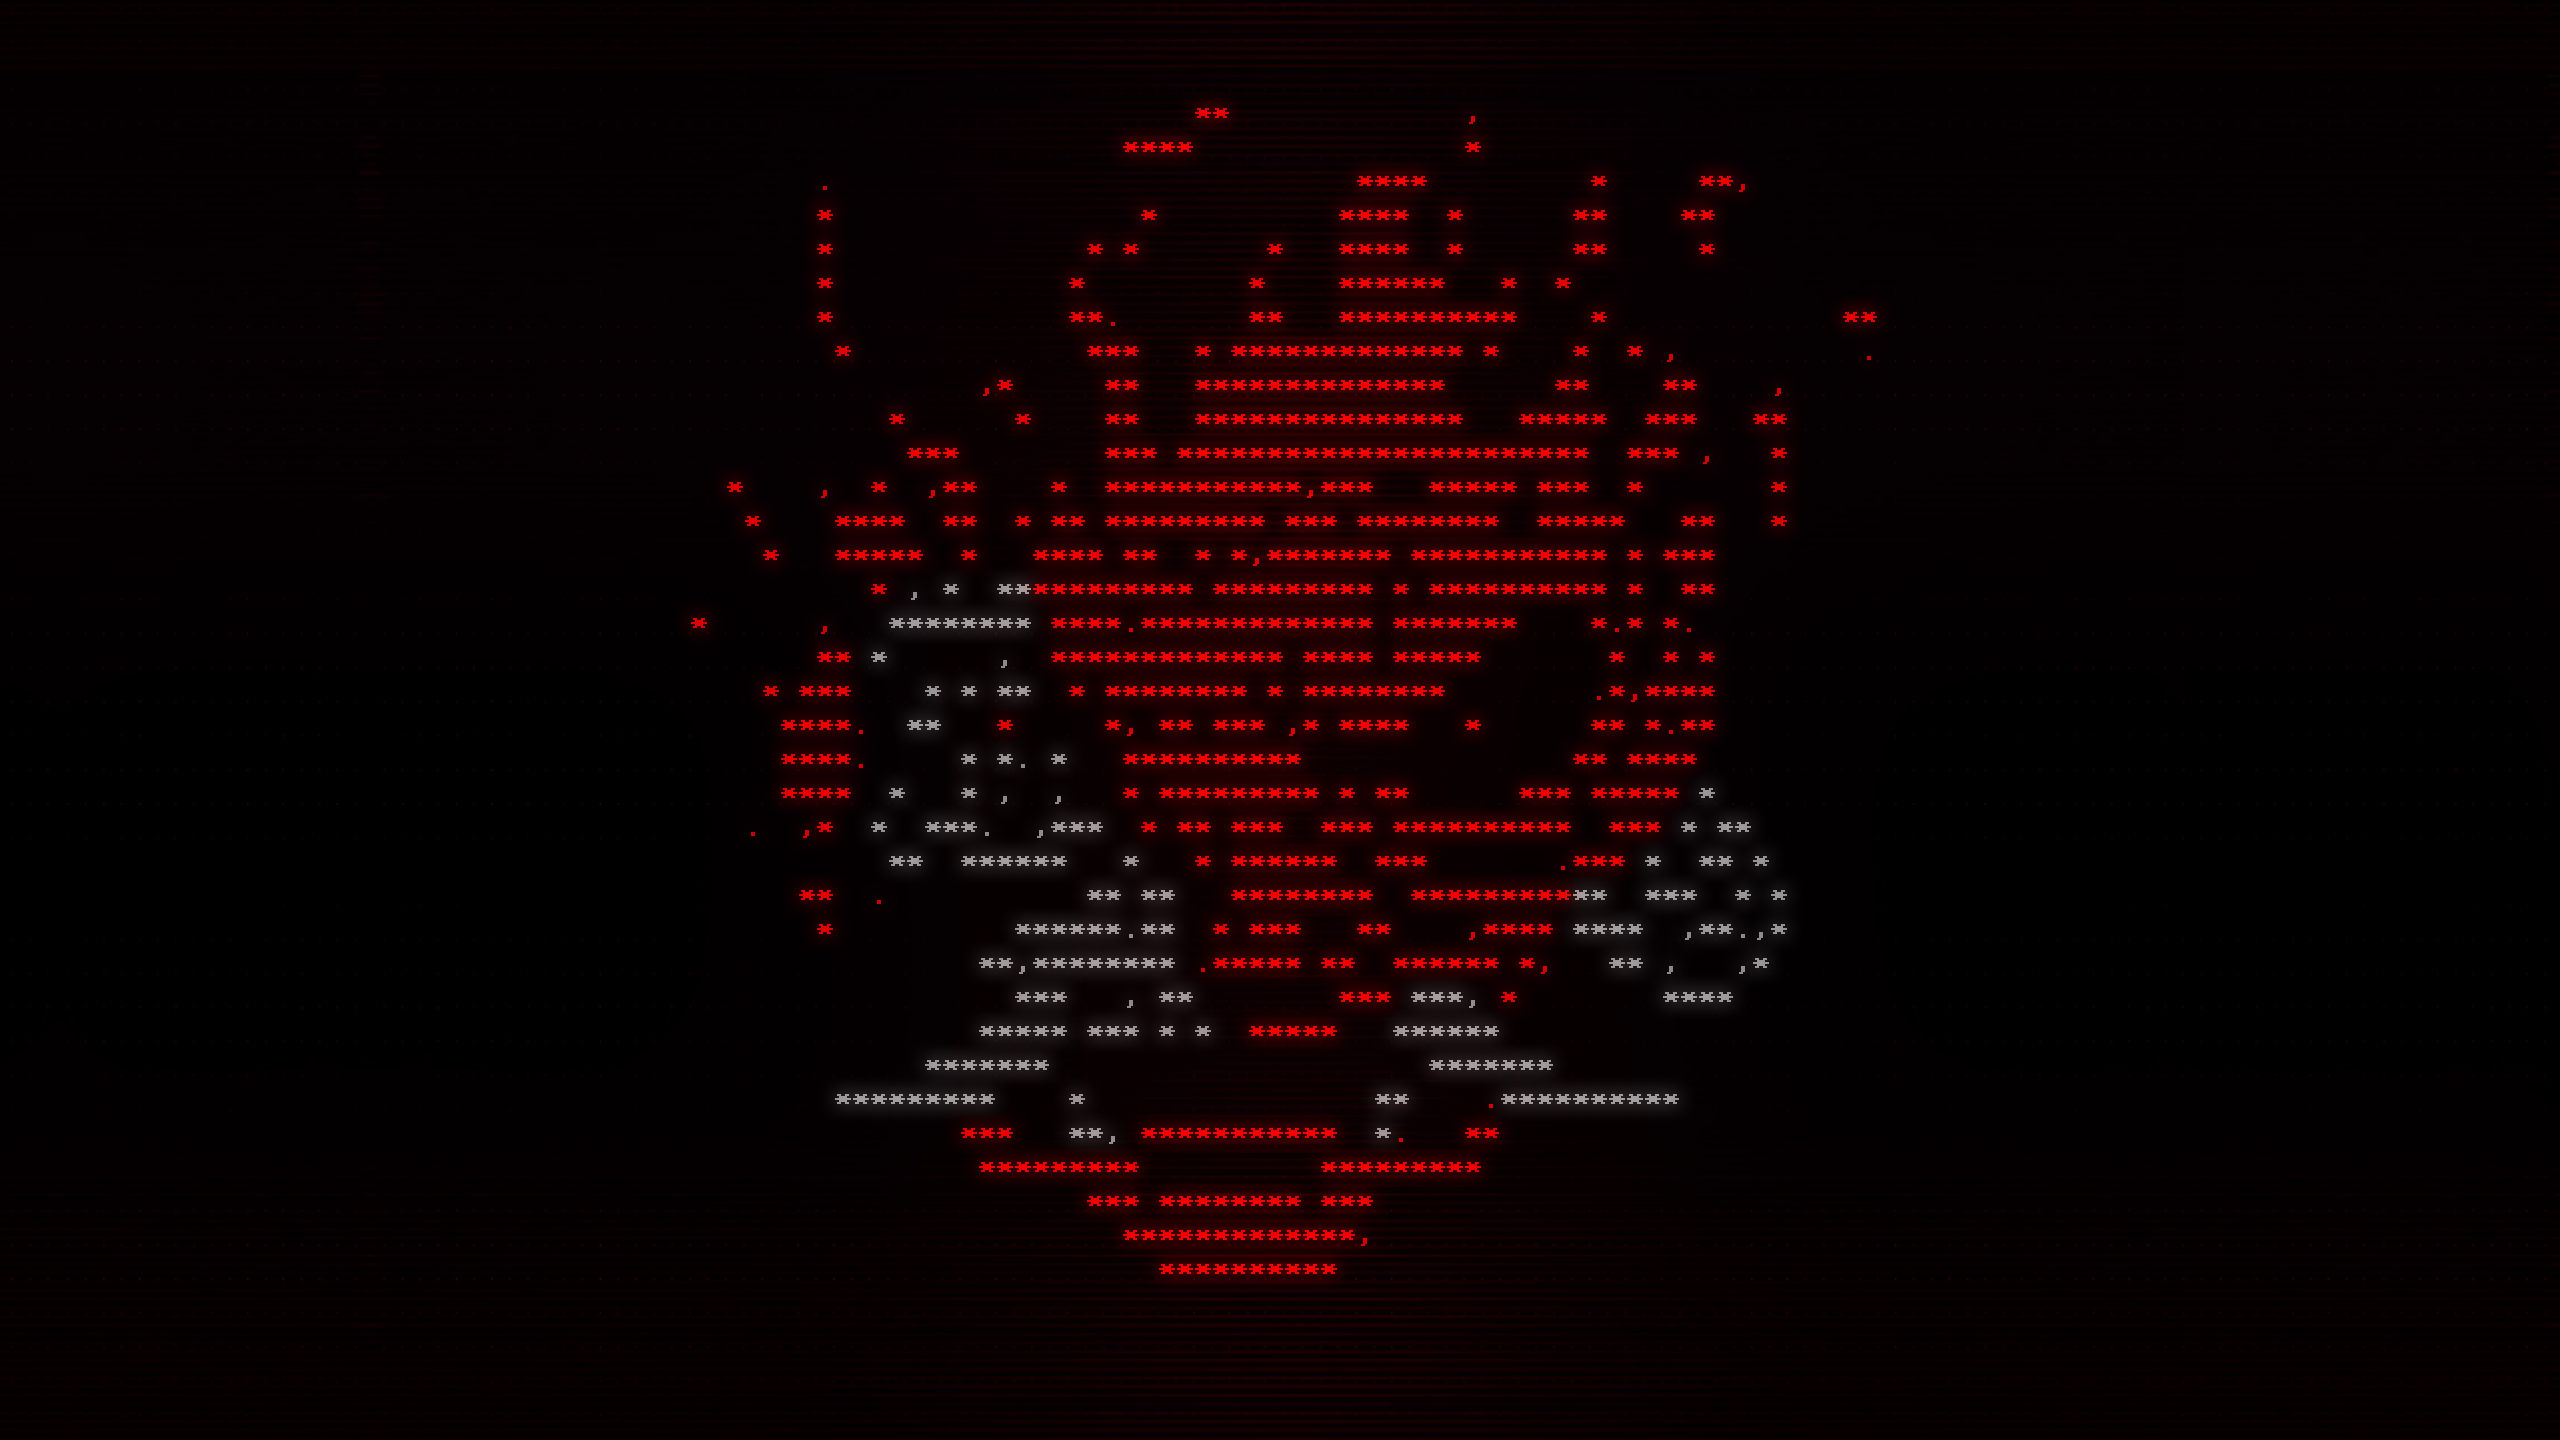 Cyberpunk язык программирования фото 33